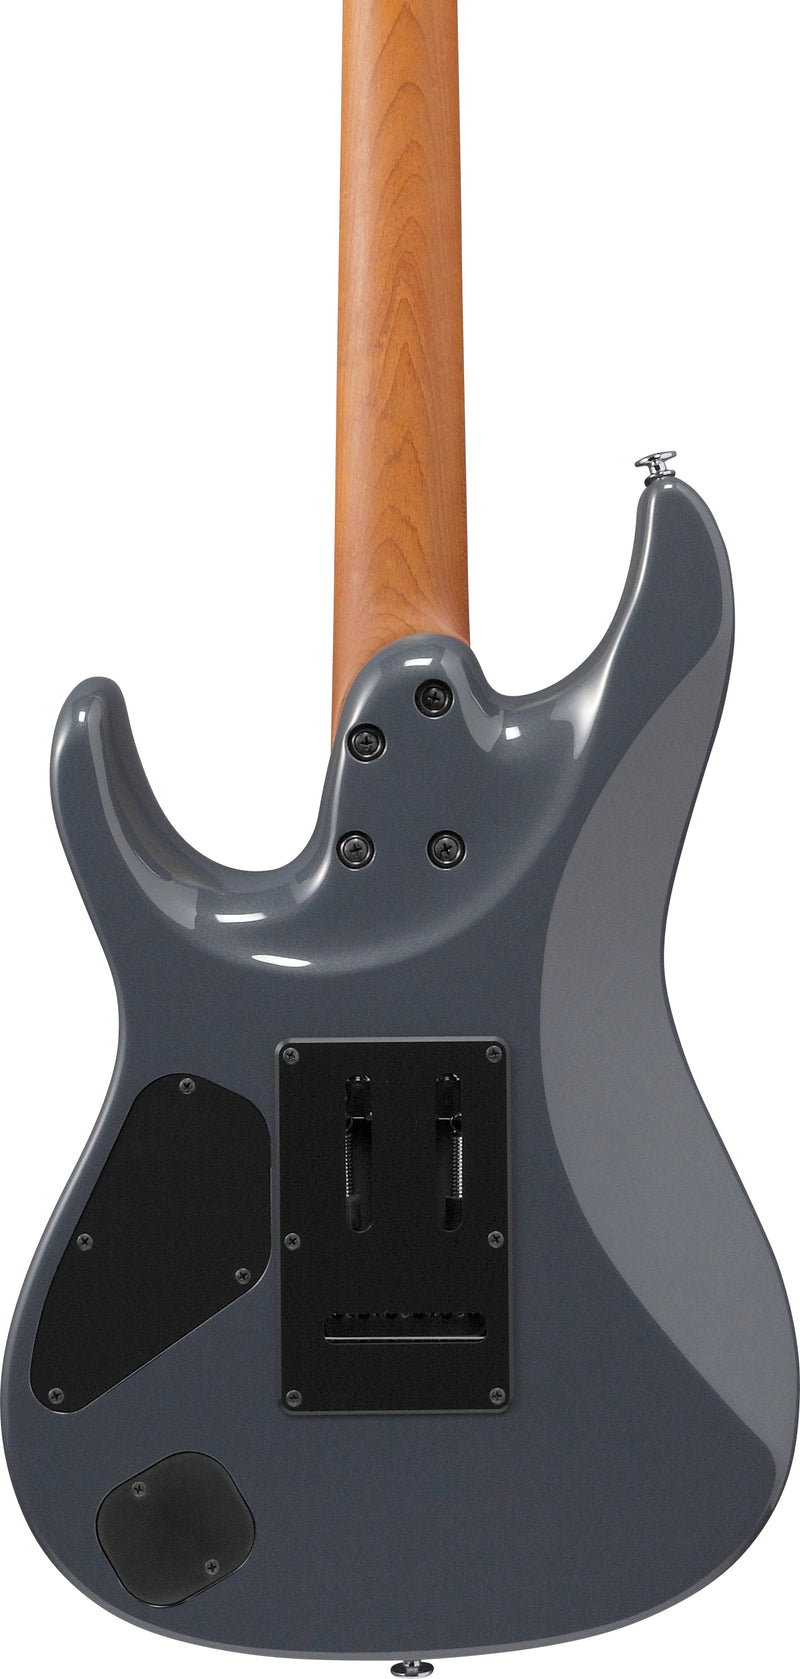 Ibanez AZ2402Grm AZ Prestige Electric Guitar (Gray Metallic)